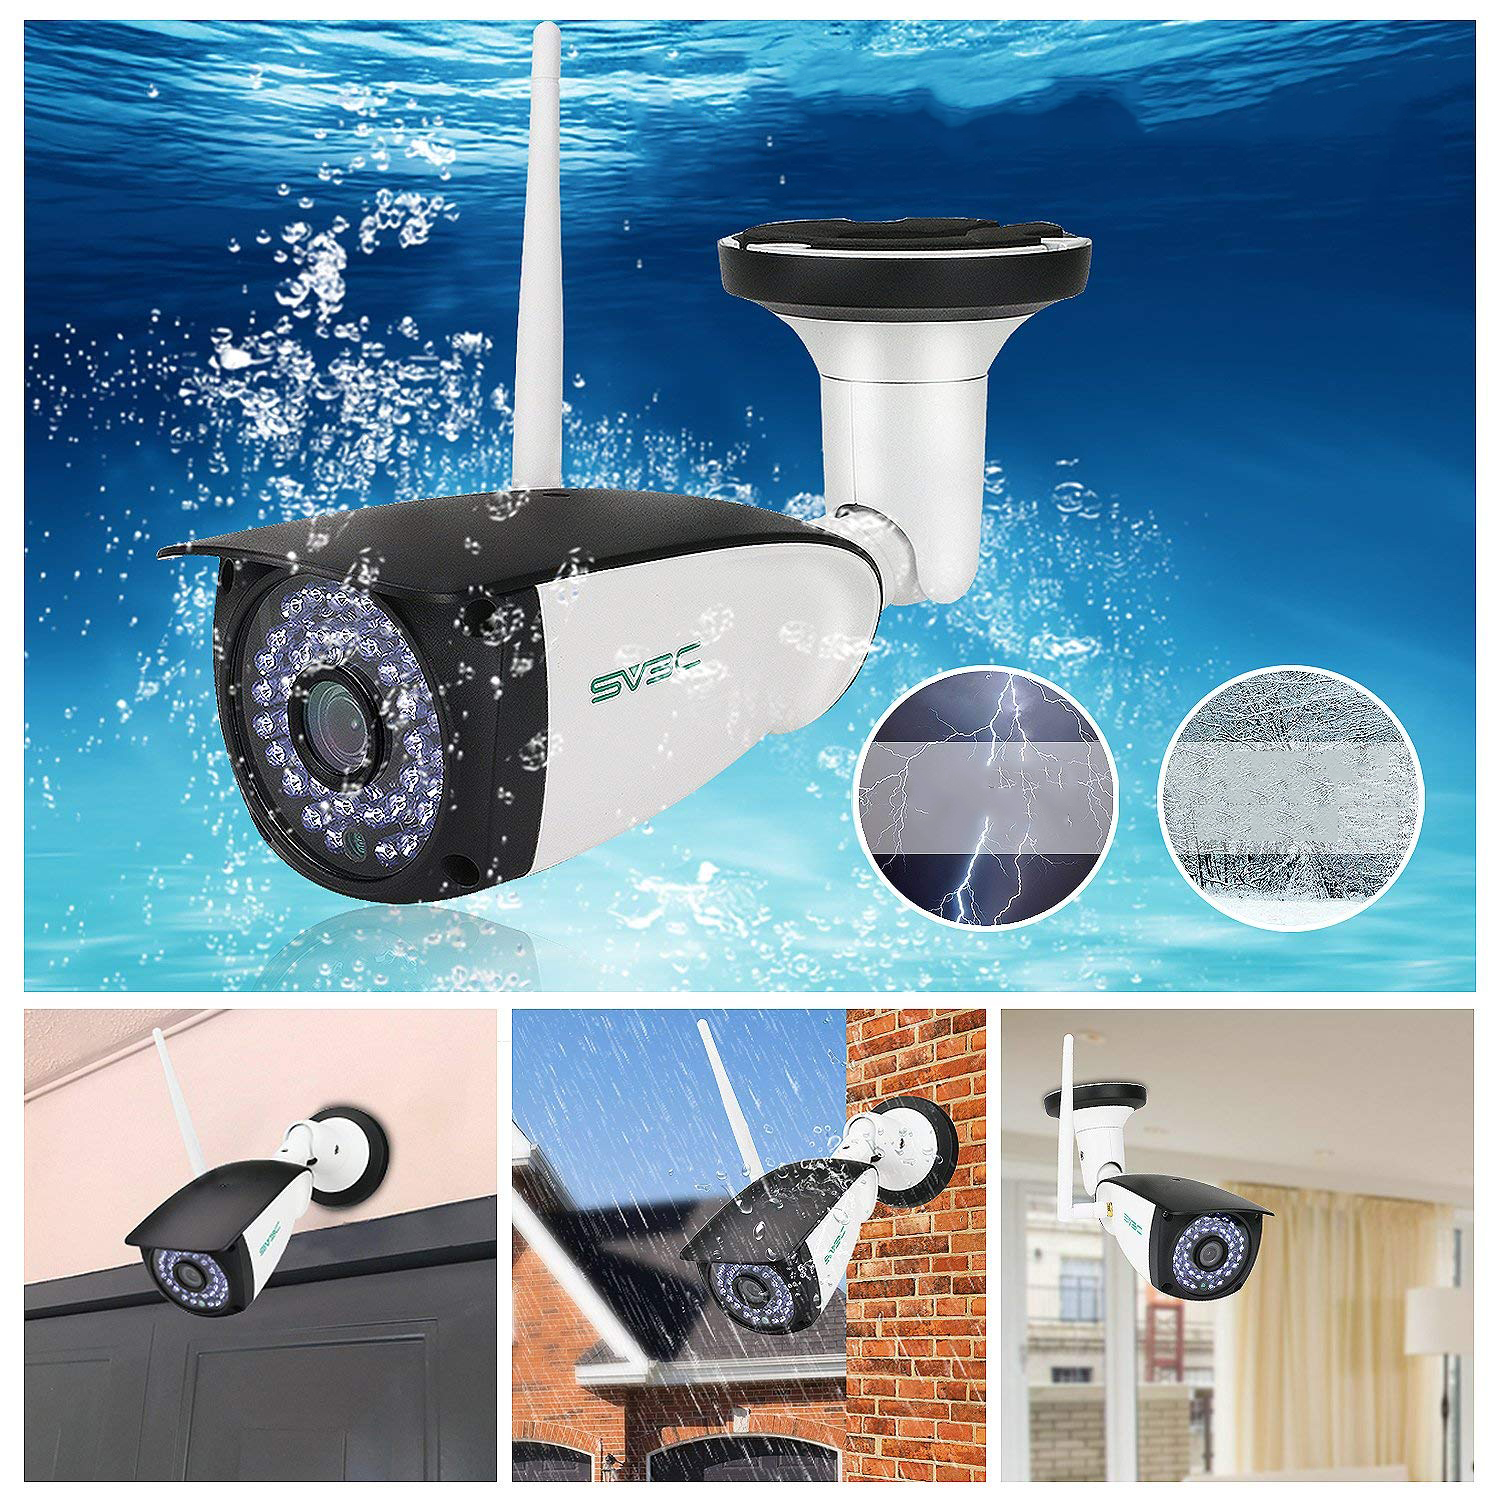 

SV3C SV-B06W-HX HD 1080P Waterproof Camera ONVIF H.264 IR Night Version M-otion Detection Two-Way Audio Baby Monitors